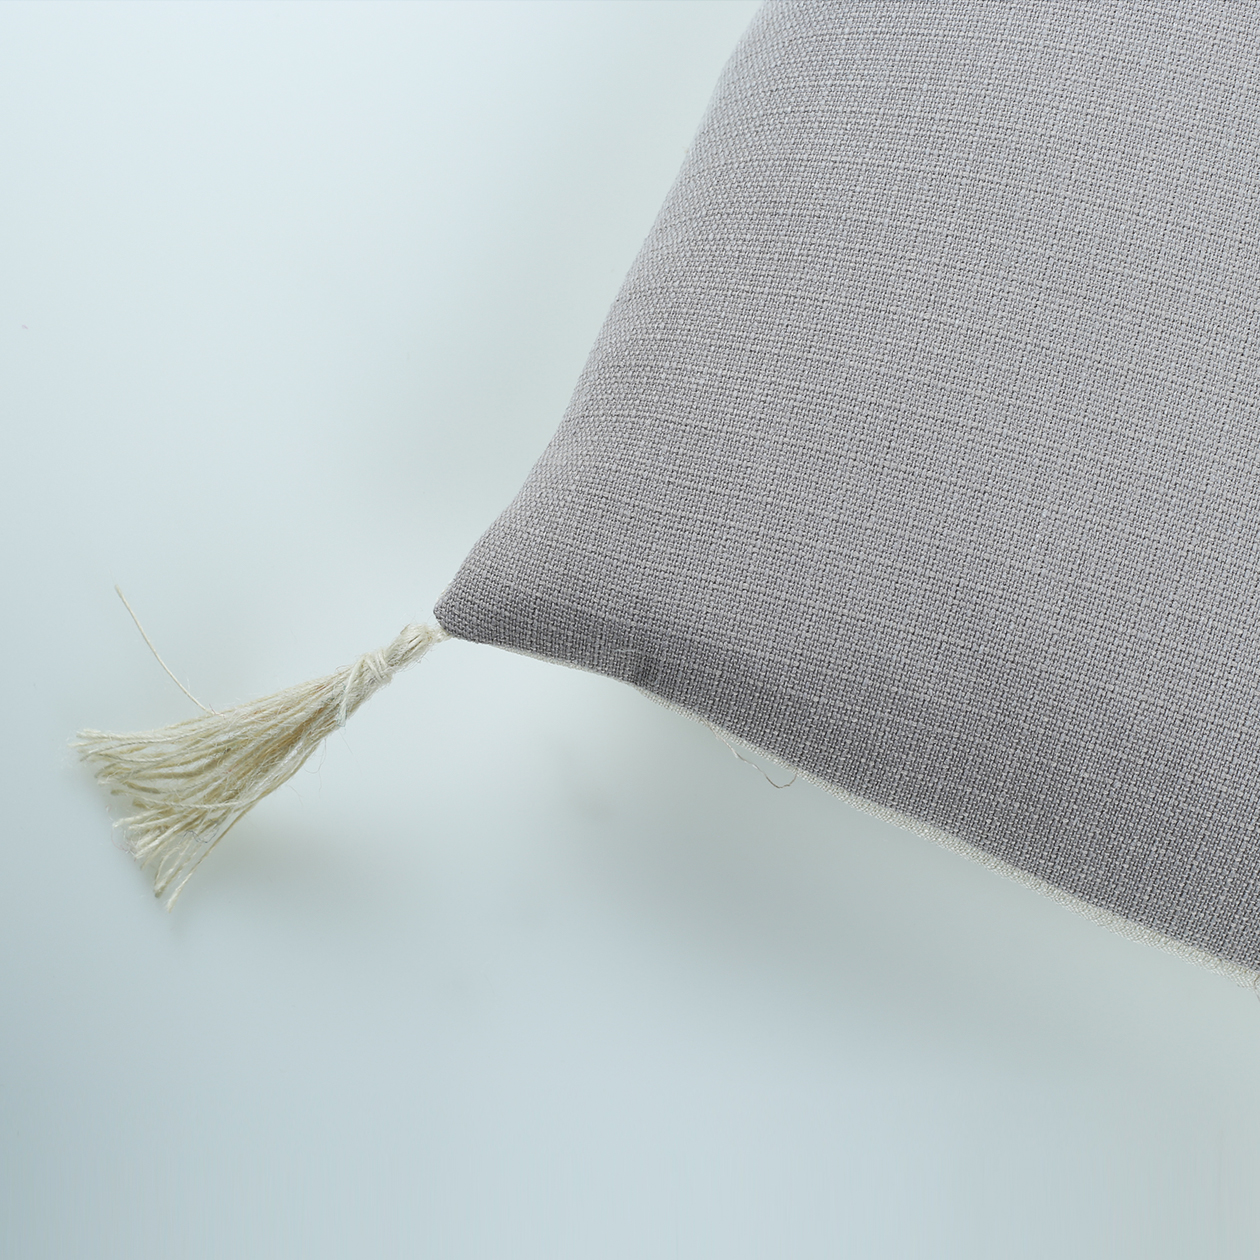 Plain cushion ，Linen-like texture，Cotton tassel